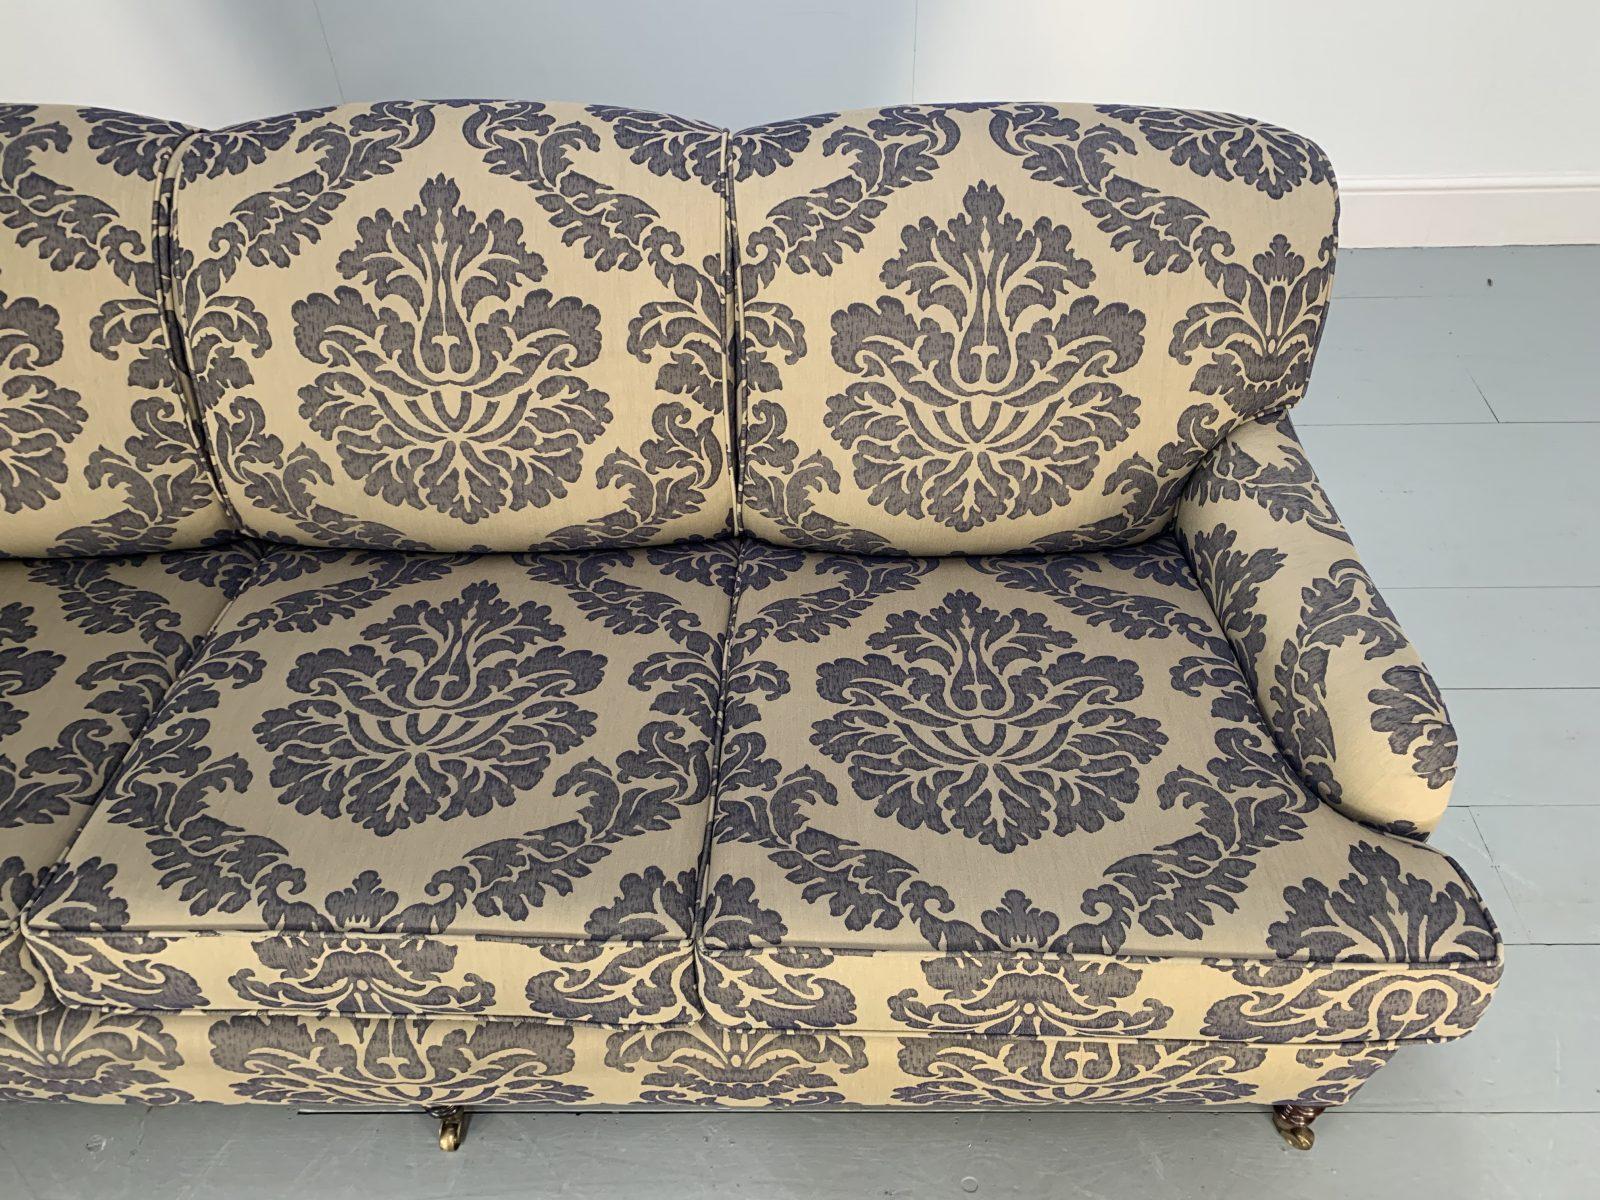 British George Smith Signature “Standard-Arm” Large 3-Seat Sofa in Bernini Damask For Sale